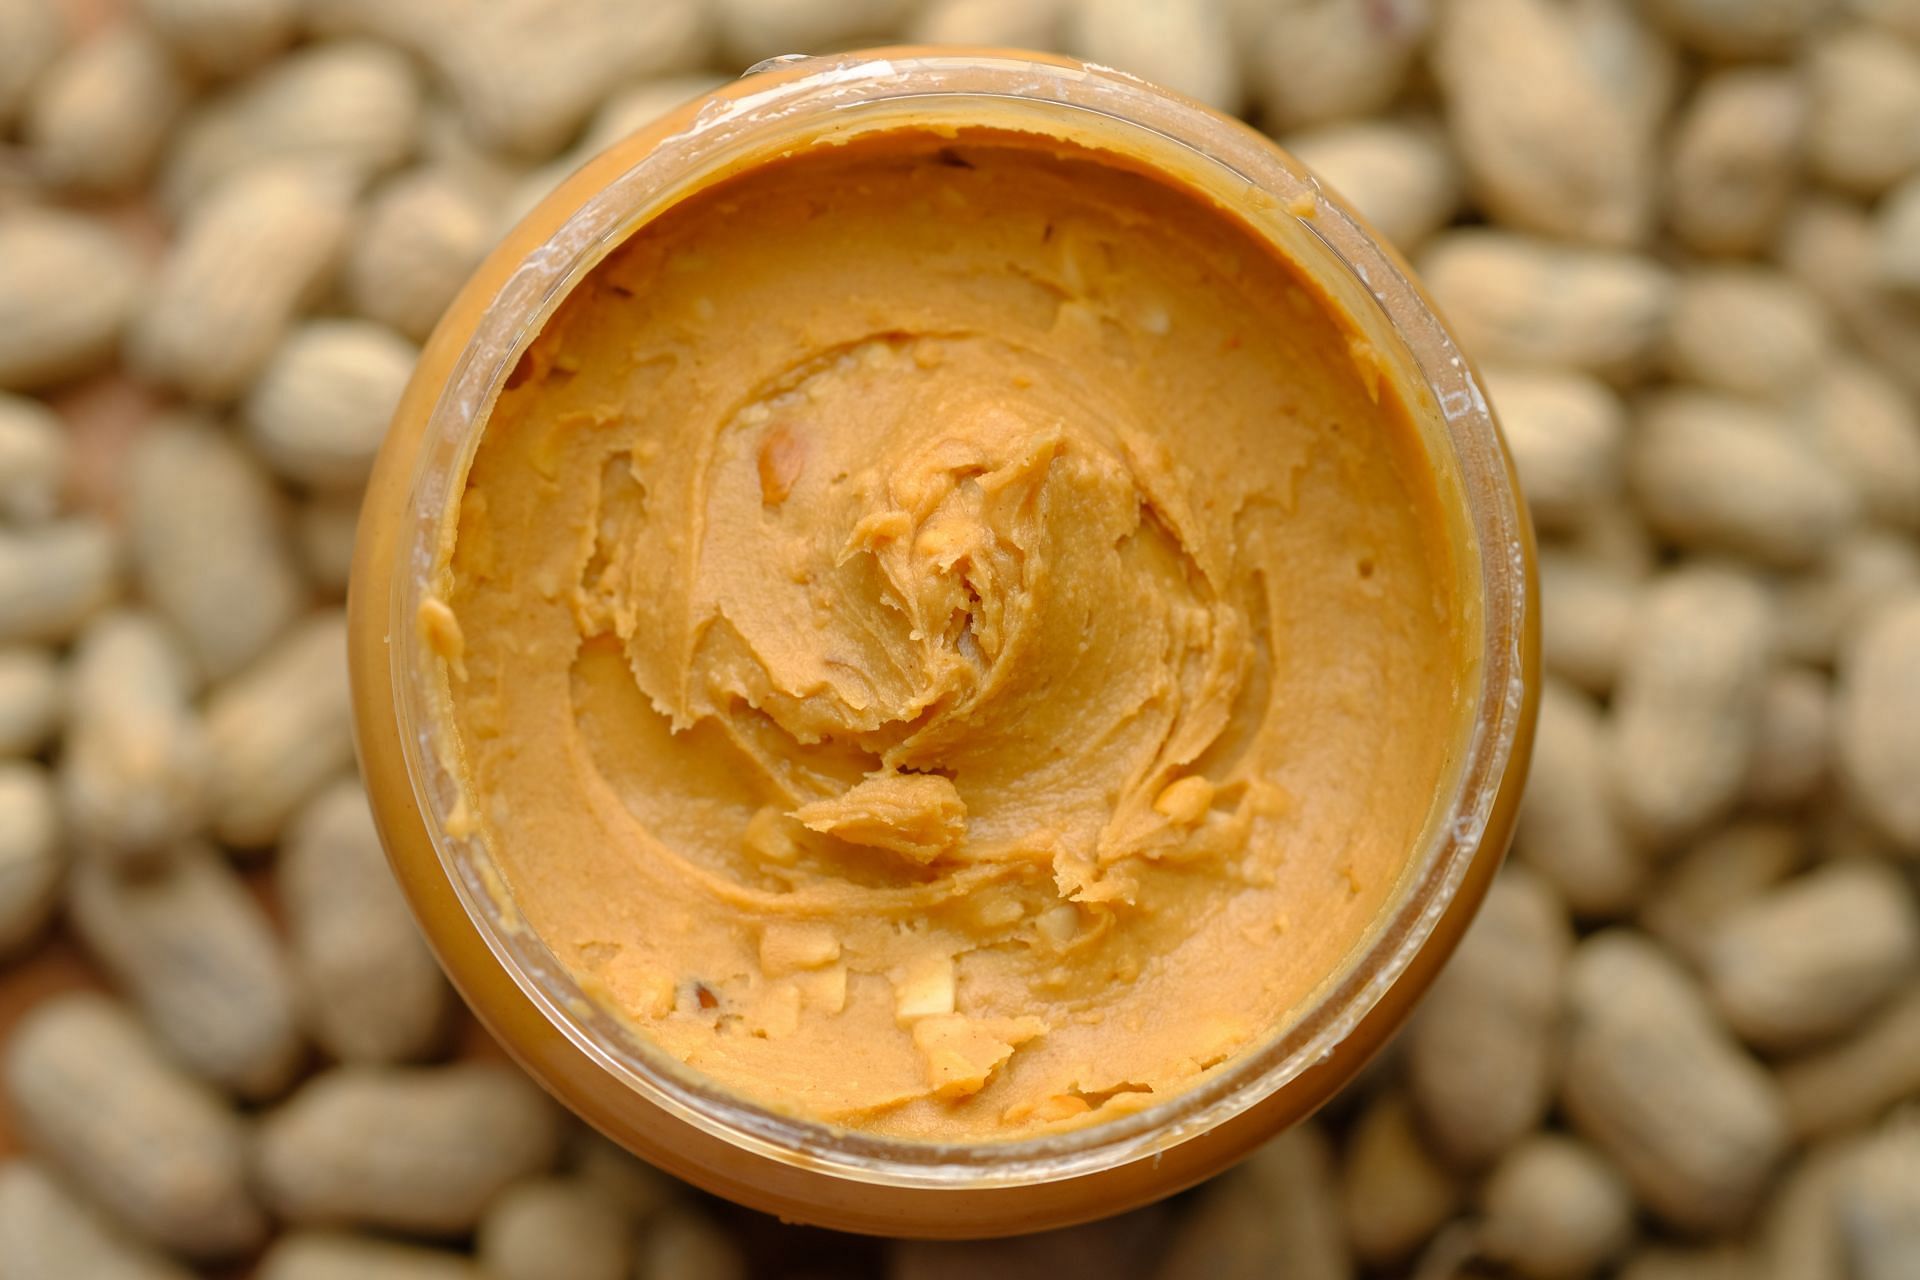 Peanut butter is a rich source of protein (Image via Unsplash/Towfiqu barbhuiya)